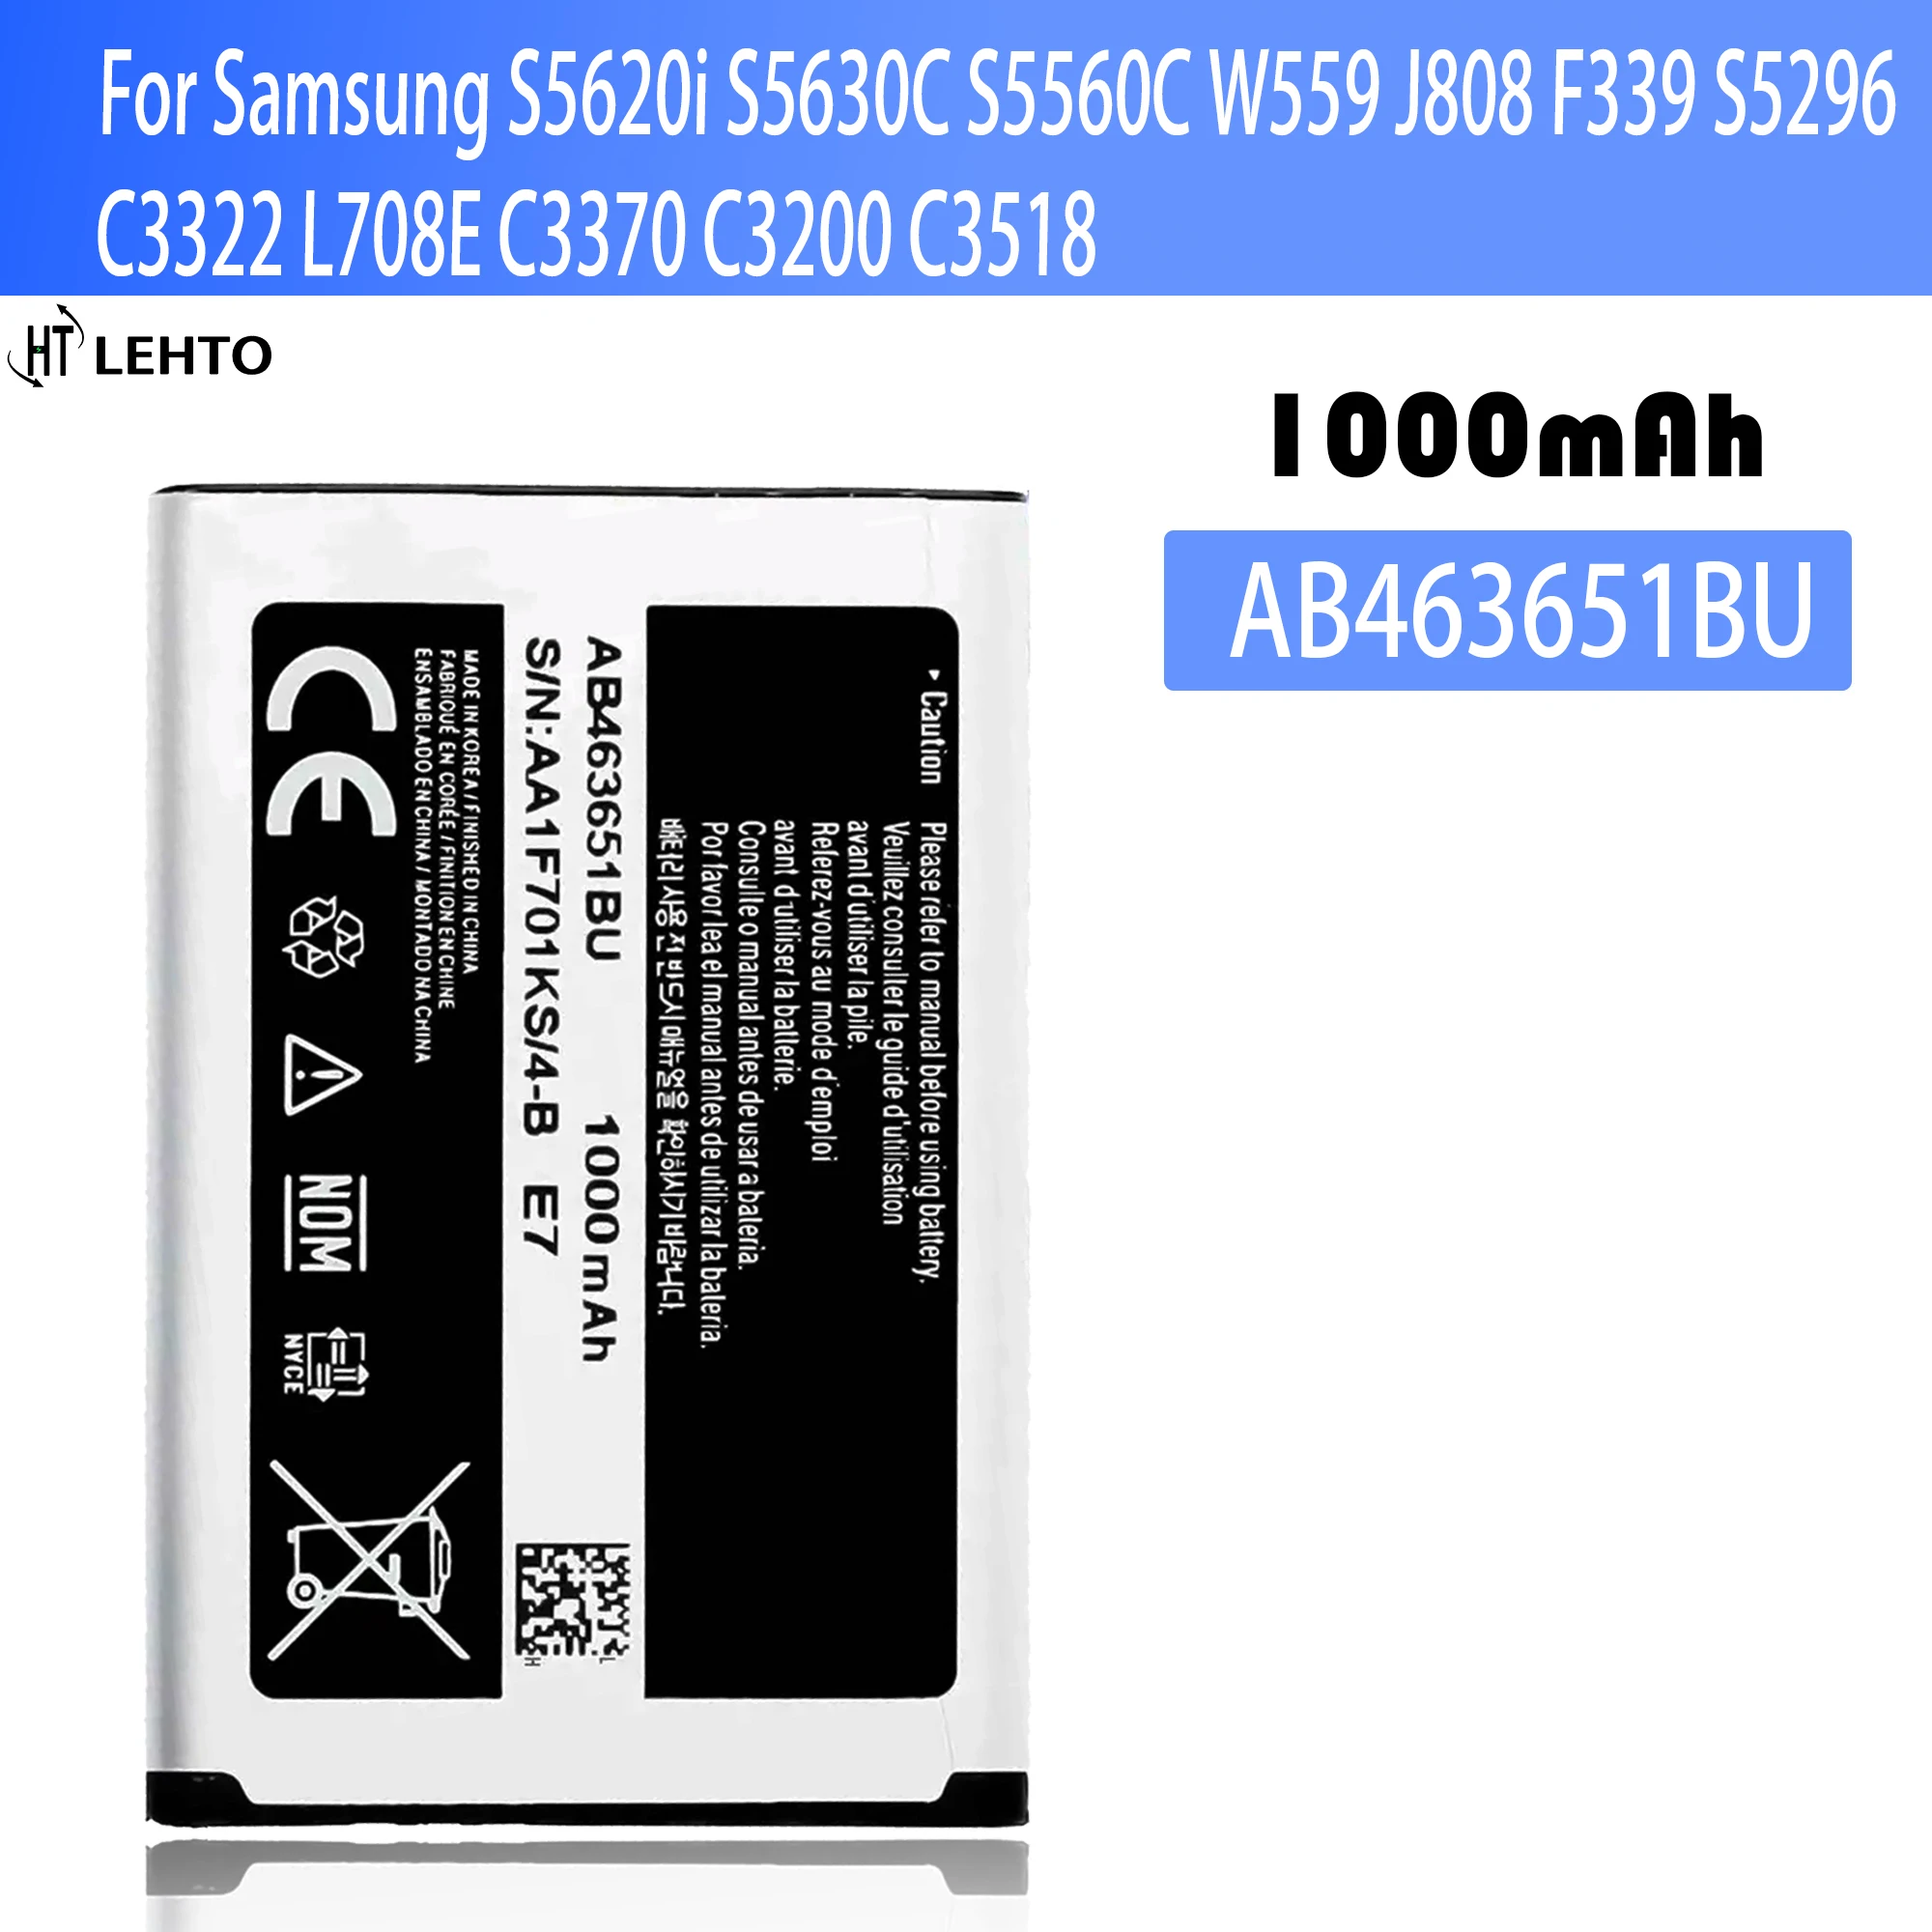 

100% Orginal AB463651BU Battery For Samsung S5620i S5630C S5560C W559 J808 F339 S5296 C3322 L708E C3370 C3200 C3518 Batteries